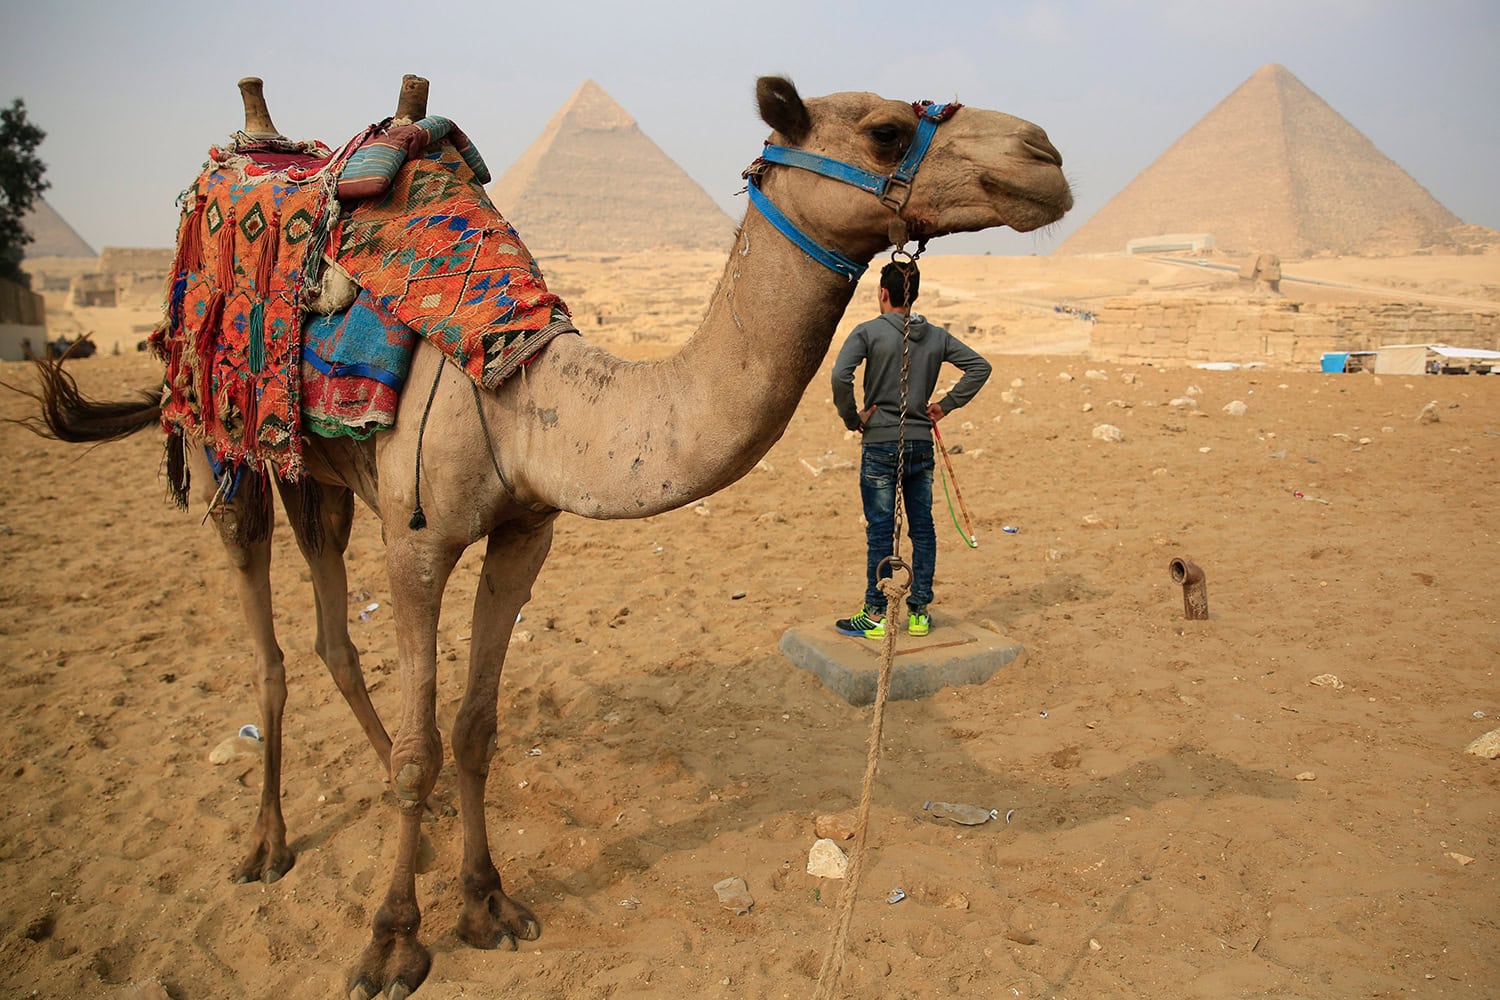 Egypt deserted, no tourists